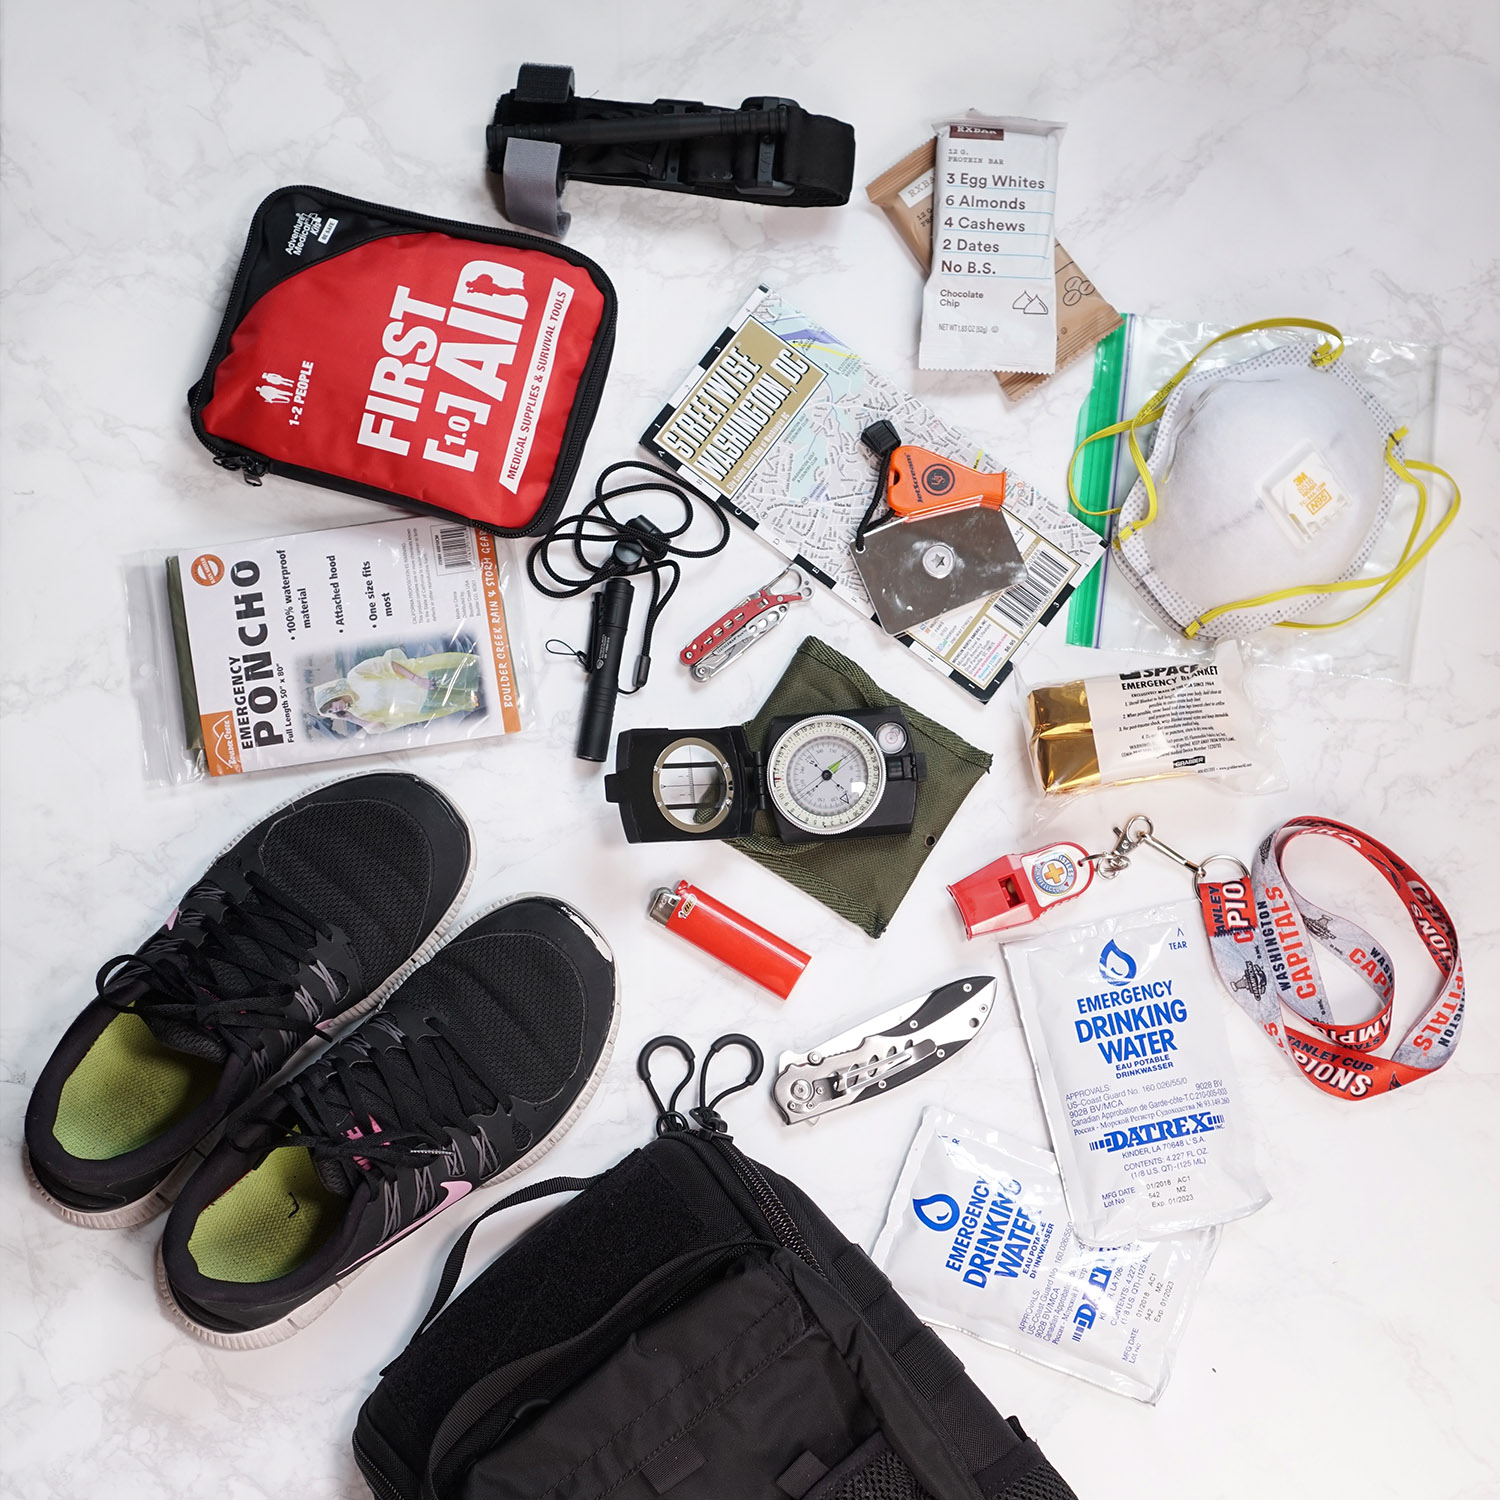 Get Home Bag Essentials; Emergency Kit